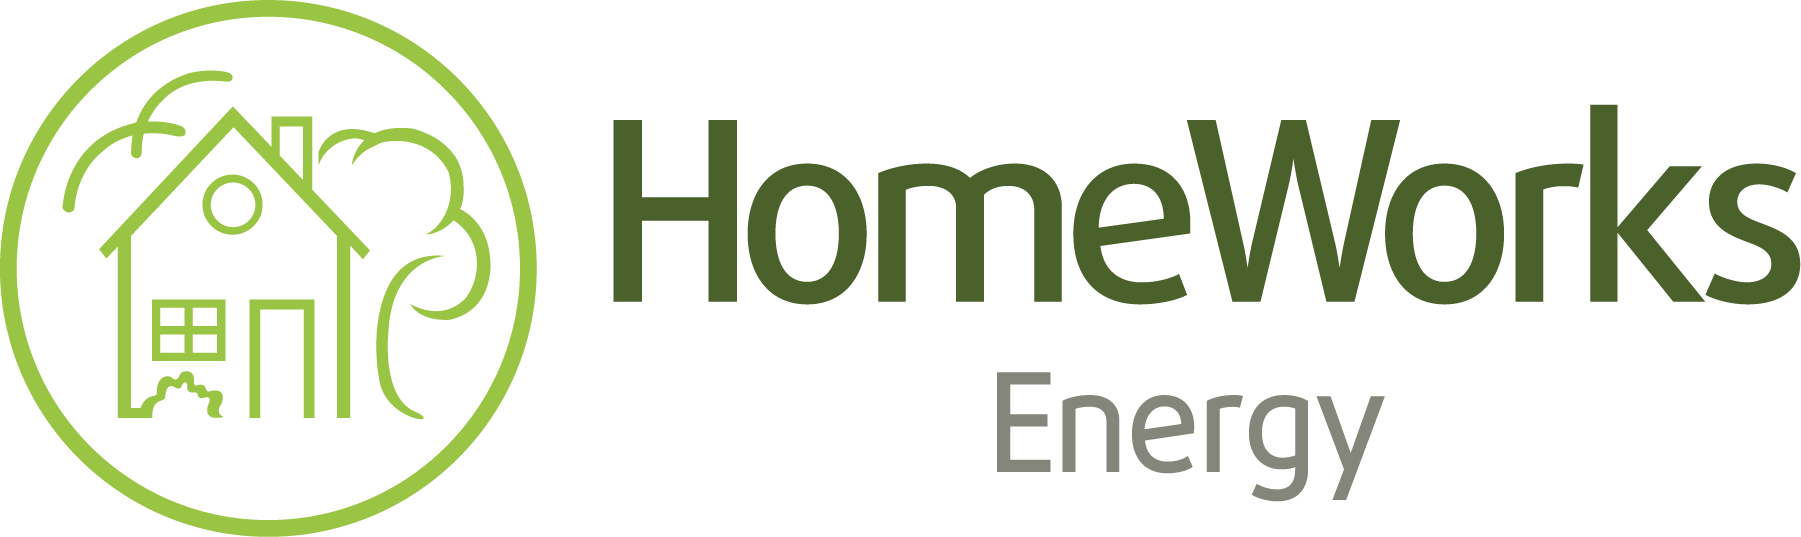 homeworks energy logo